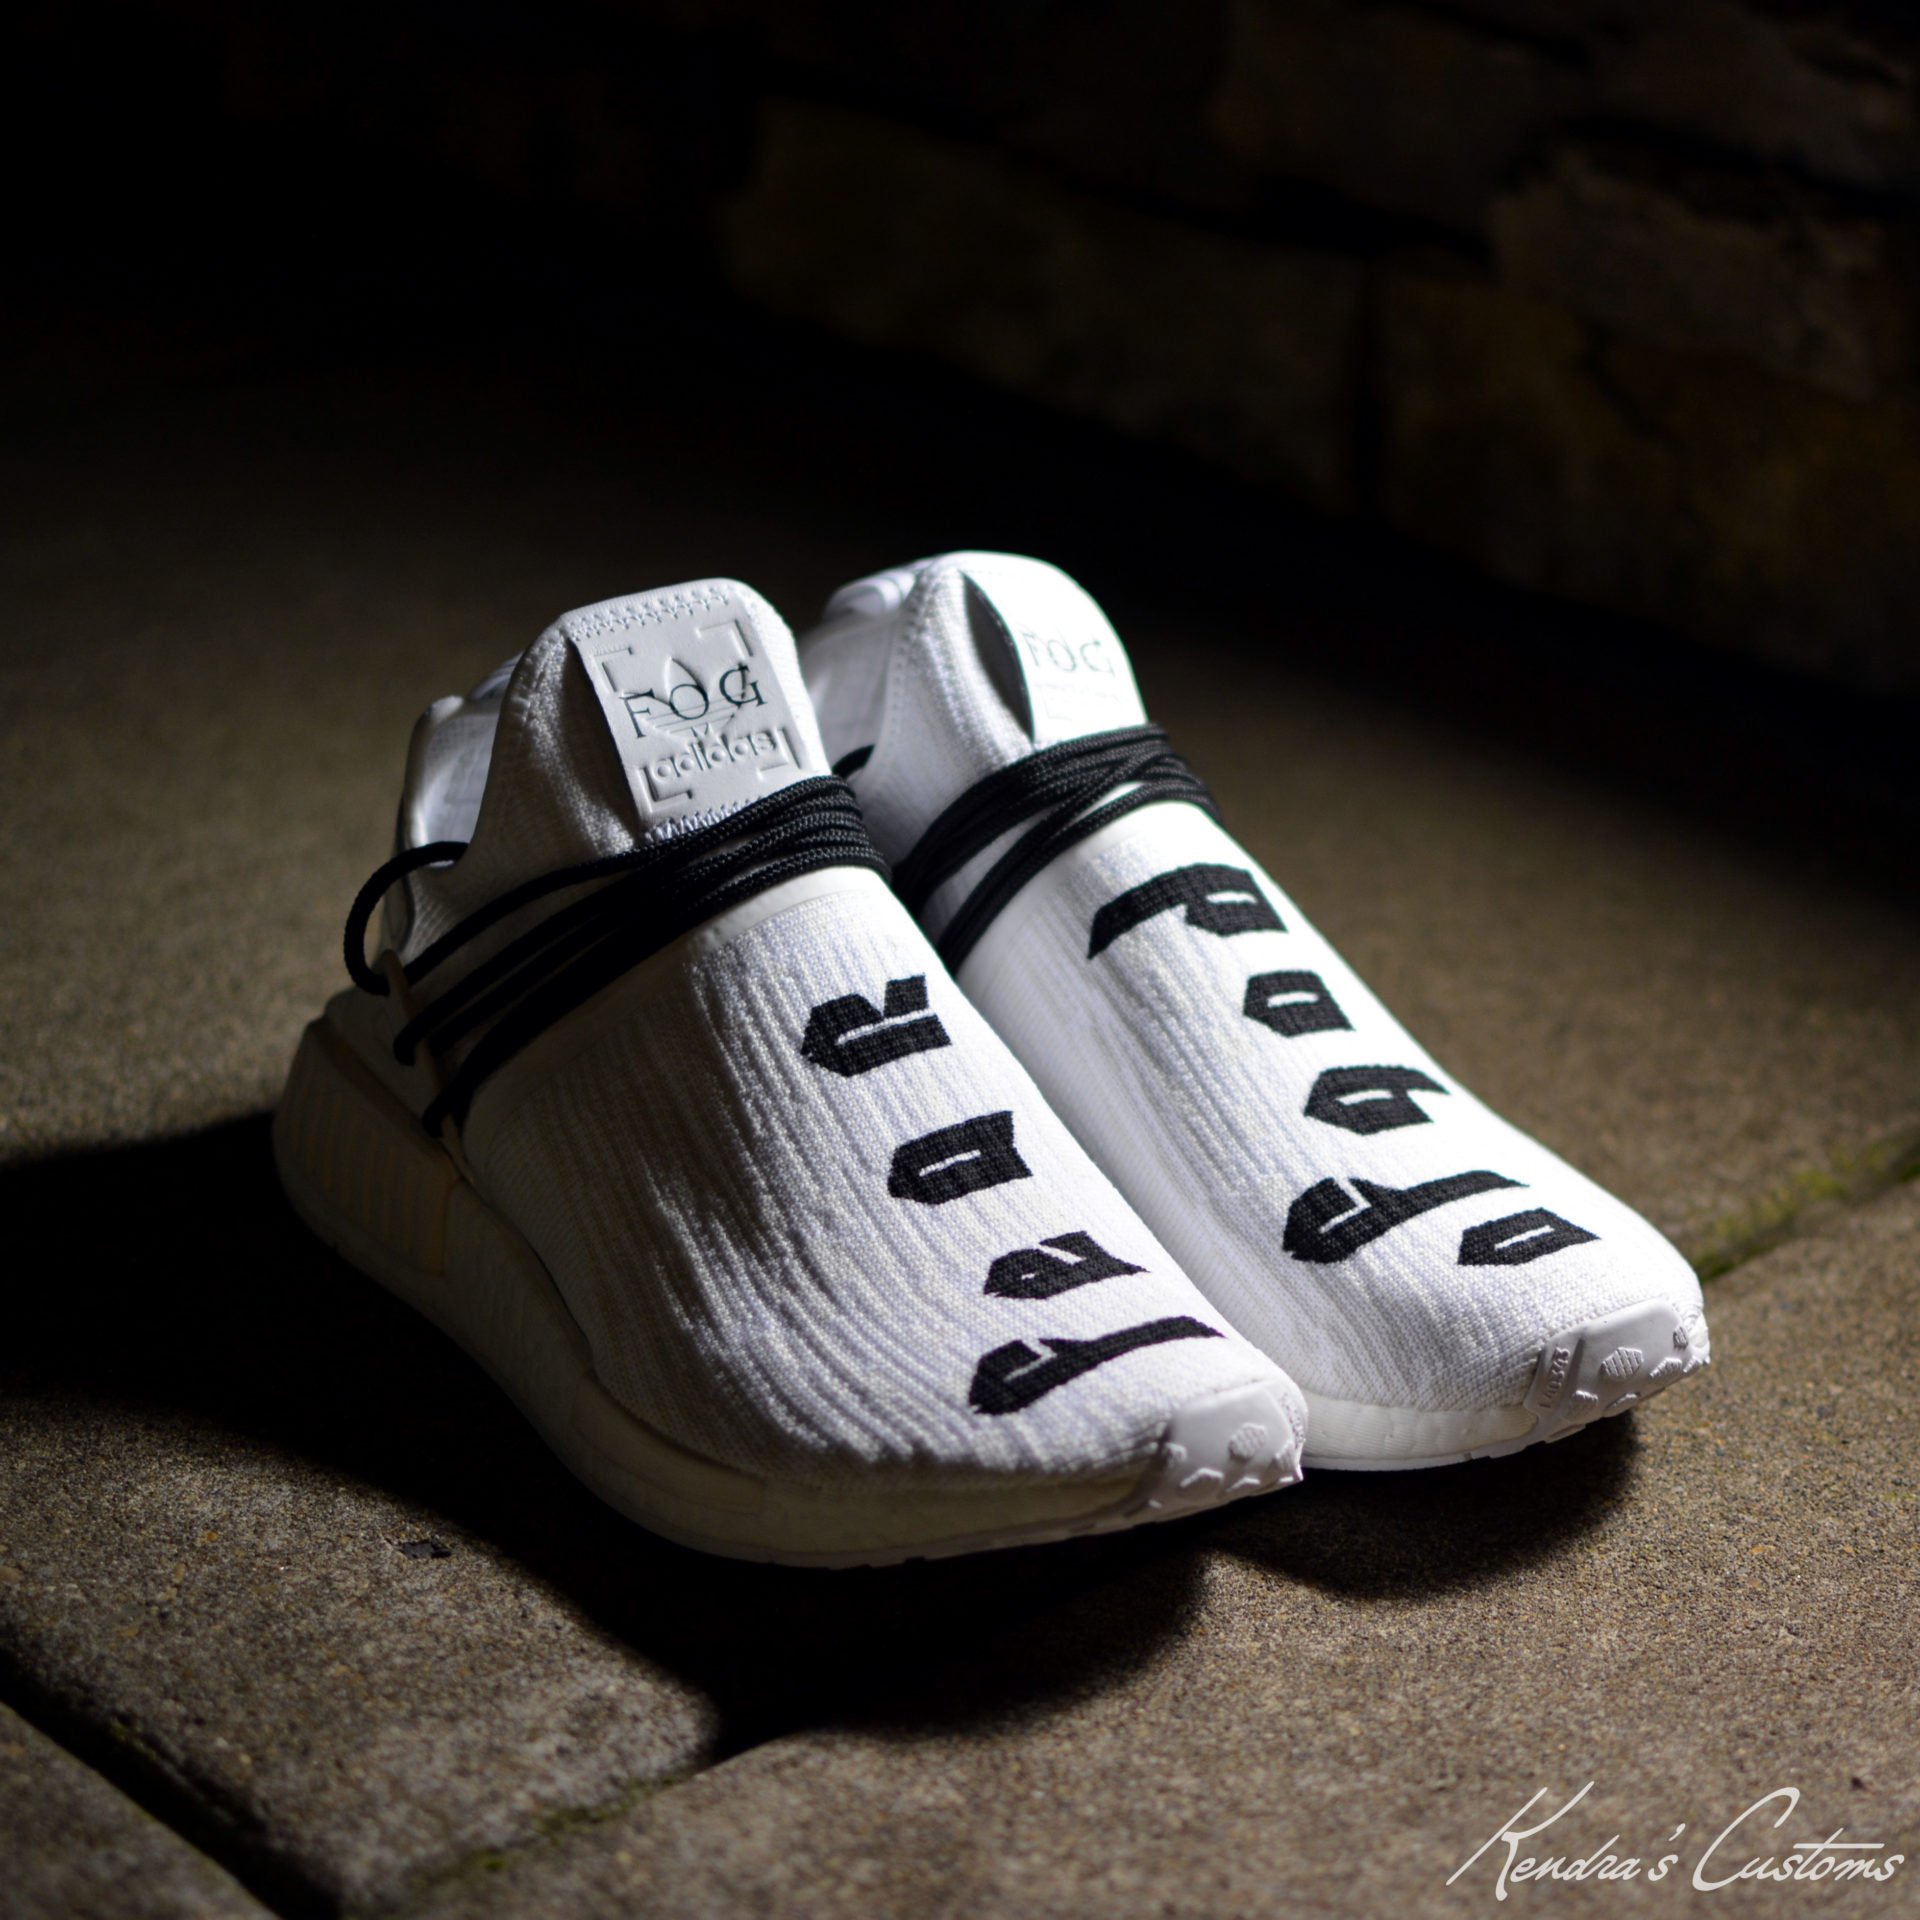 Kendra's Customs Imagines Fear of God x adidas NMD Collab | Nice Kicks